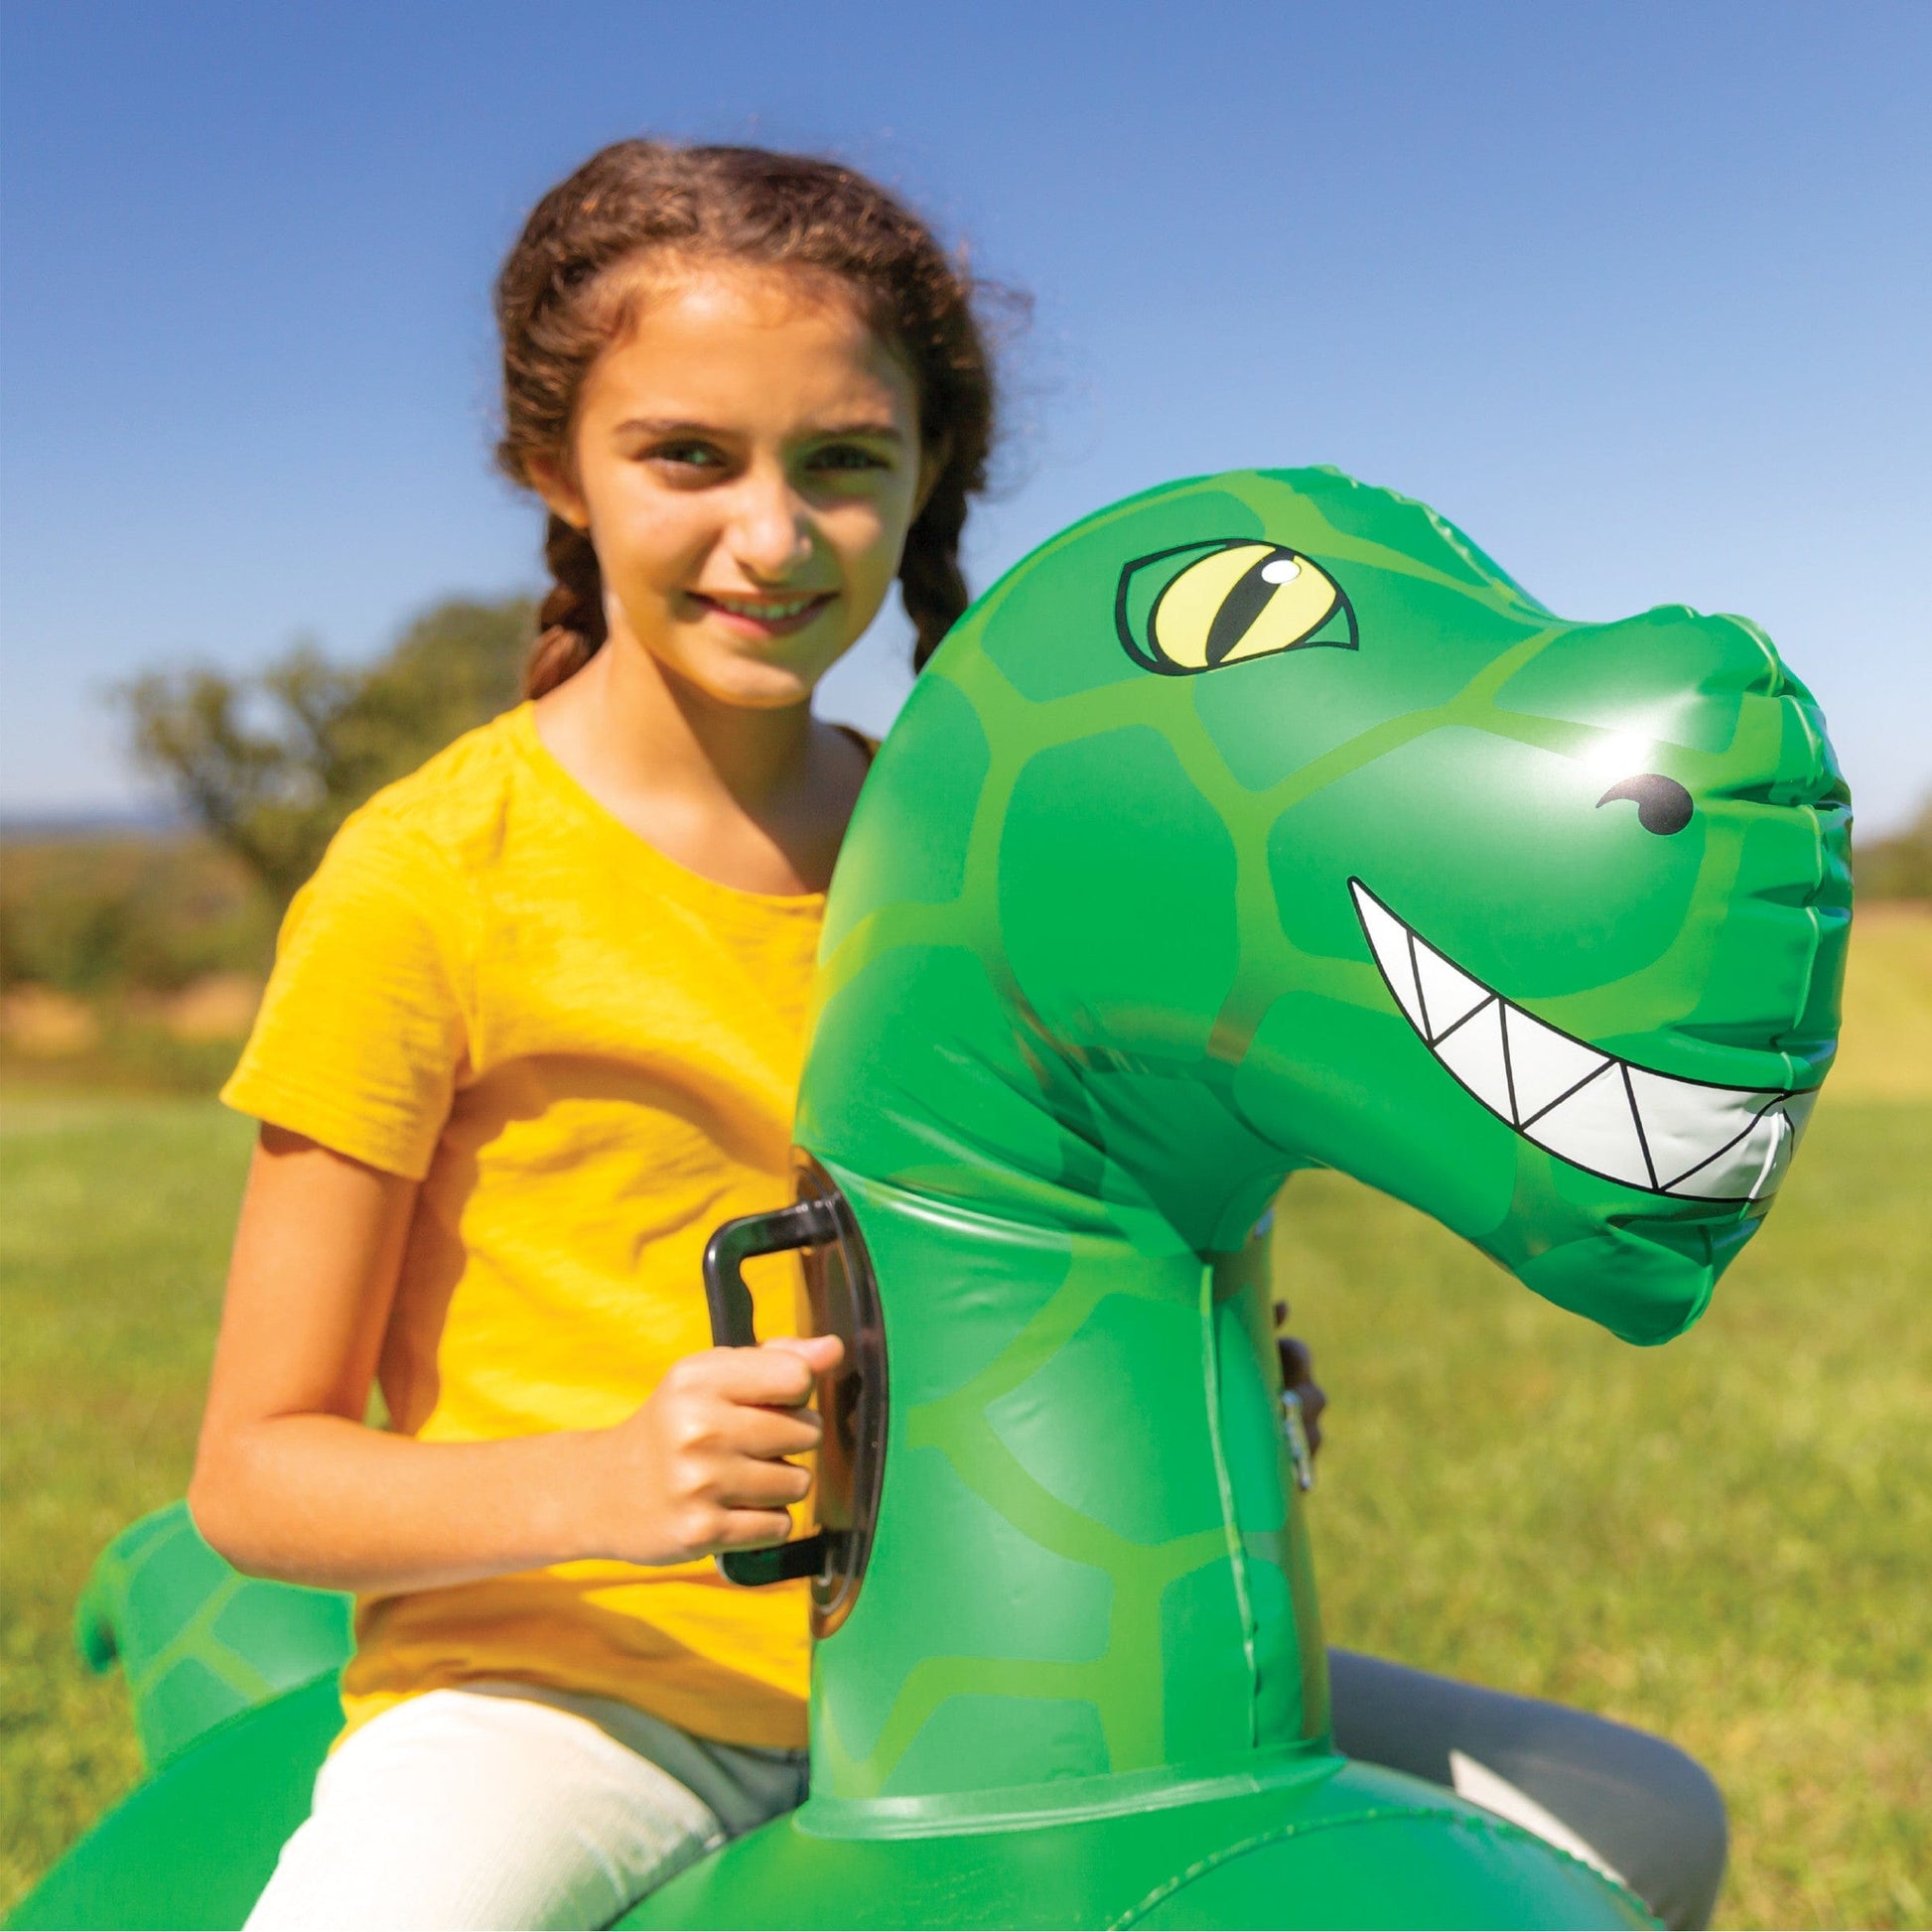 Dinosaur Bouncer Shop Inflatable bouncer